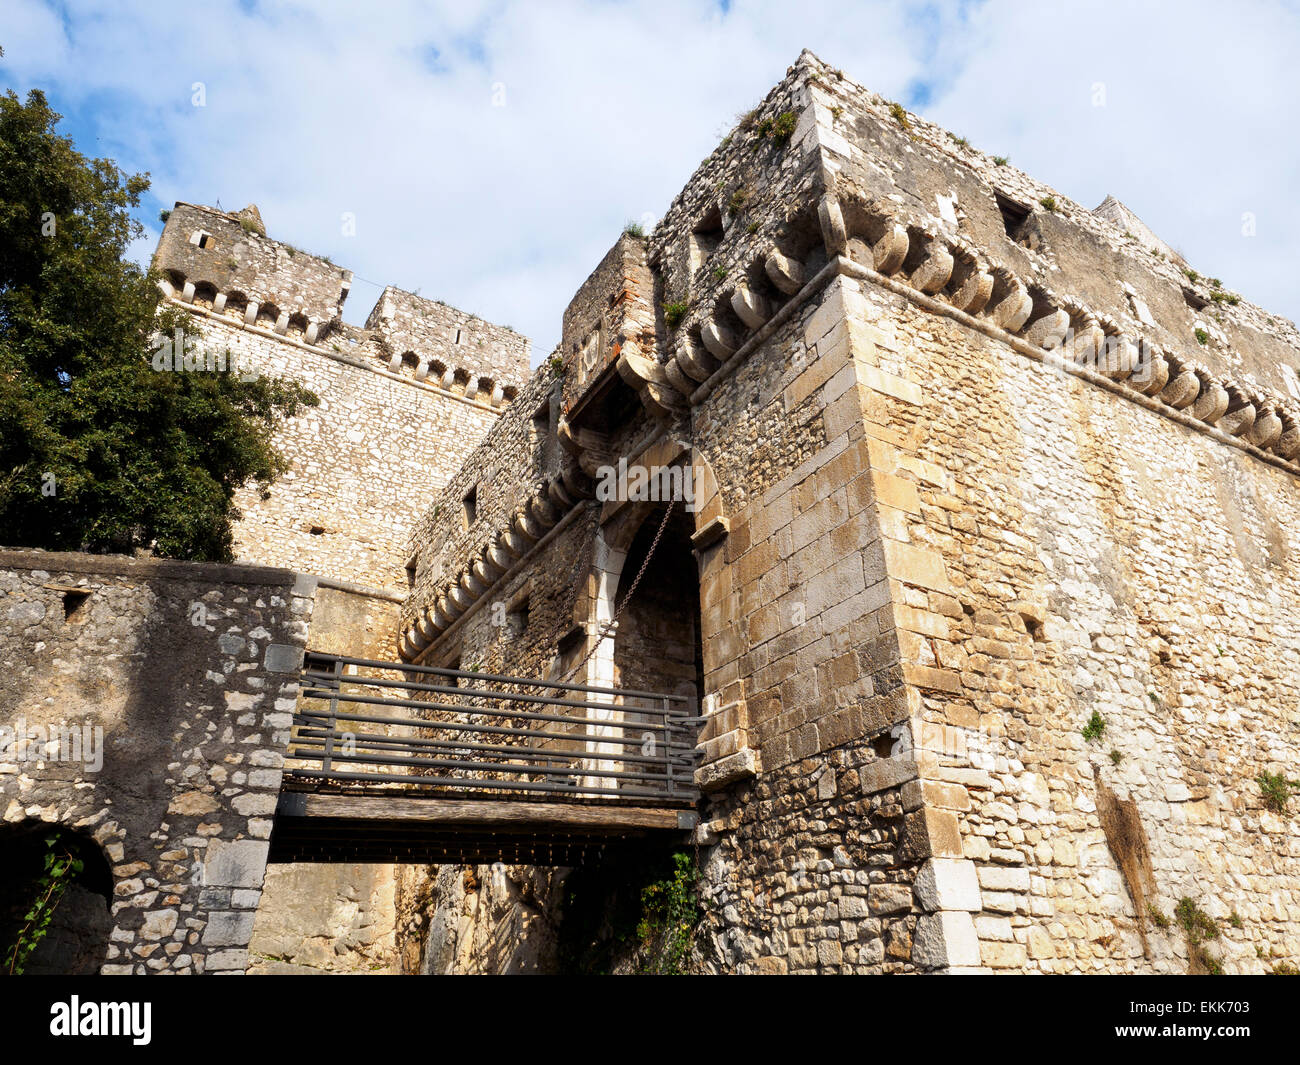 Caetani castle in the medieval town of Sermoneta - Latina, Italy Stock Photo